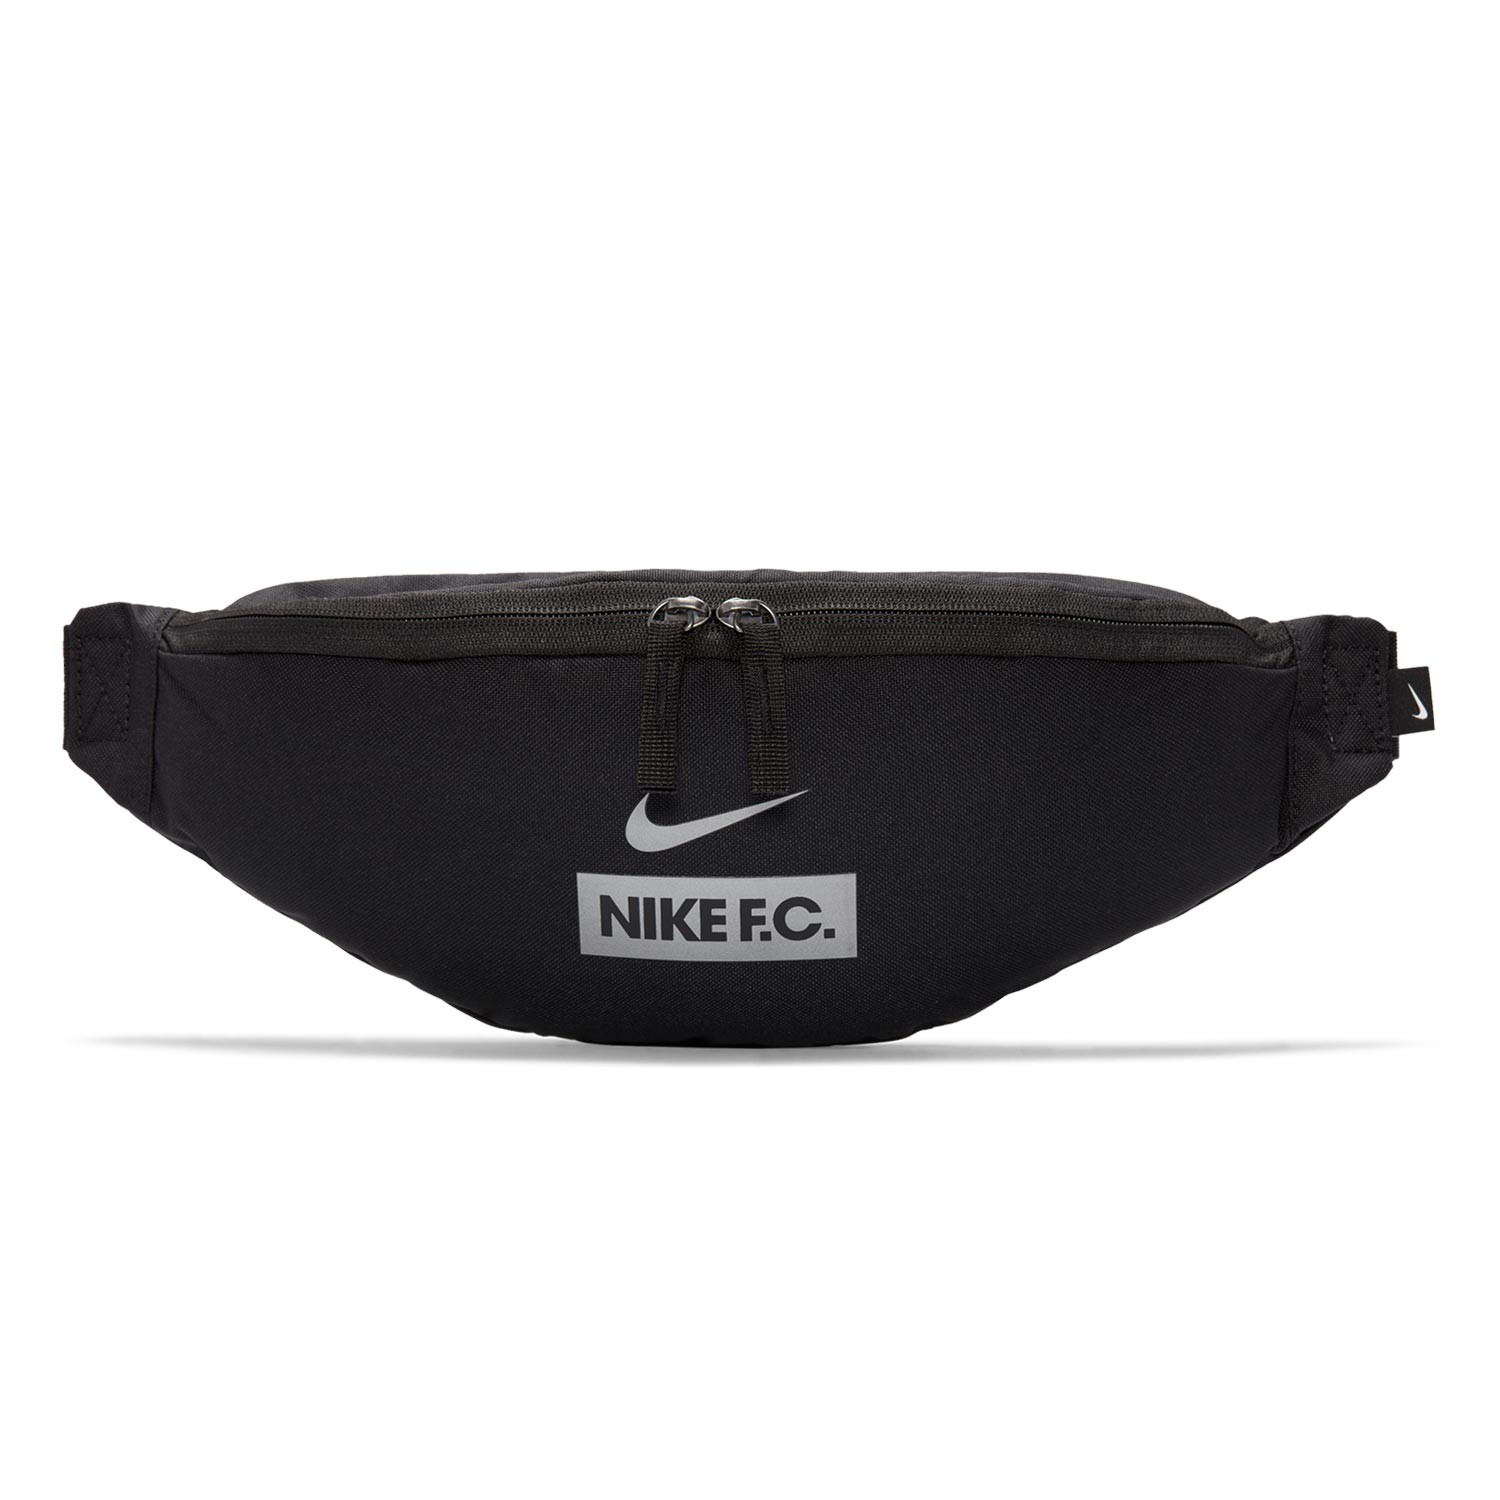 Nike FC Hip Pack negra |